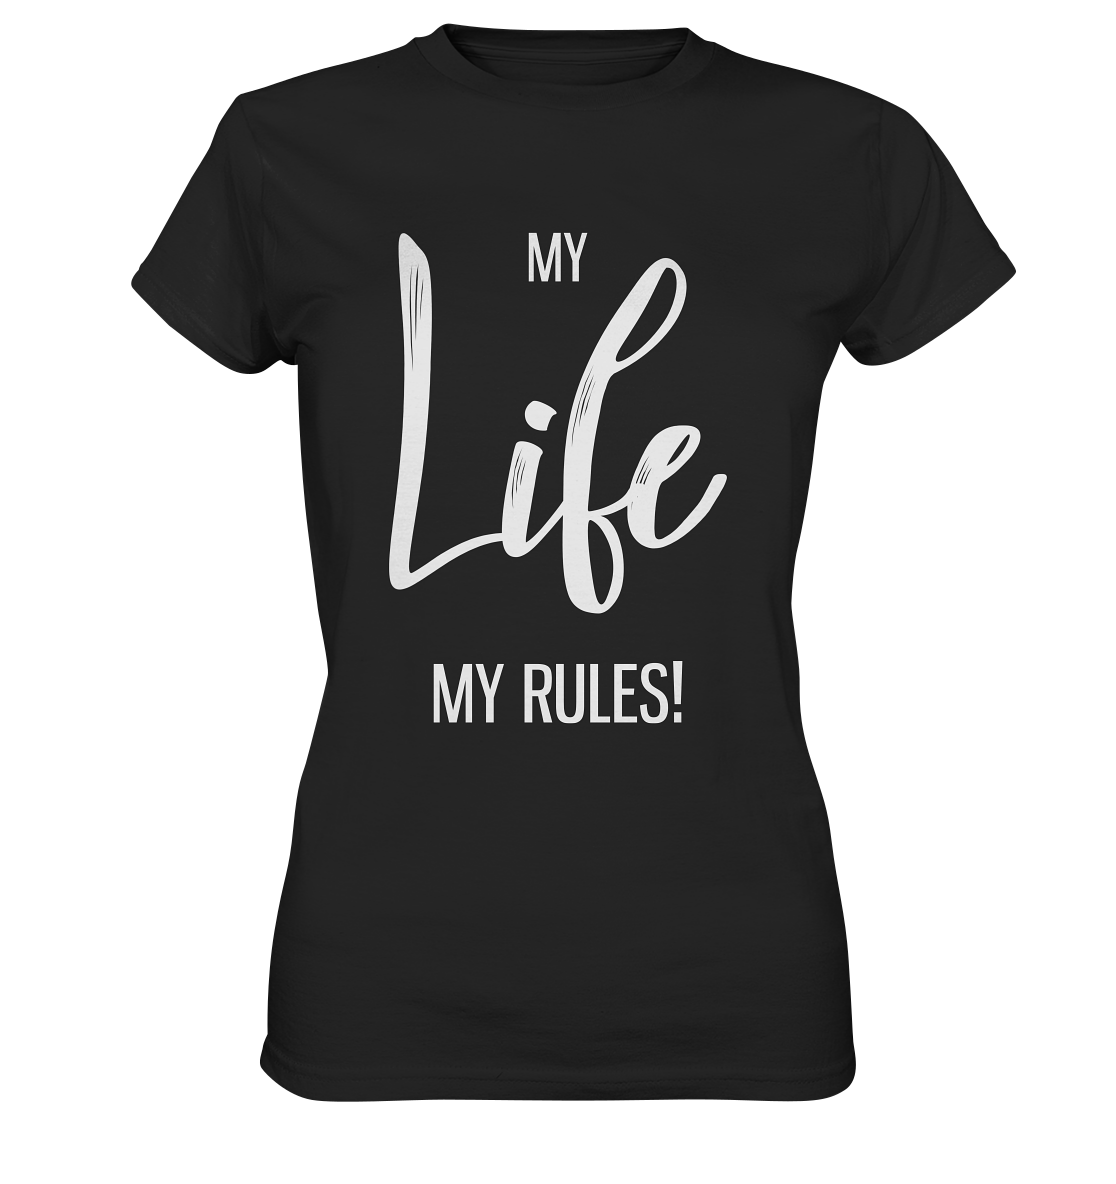 My Life. My Rules! - Ladies Premium Shirt